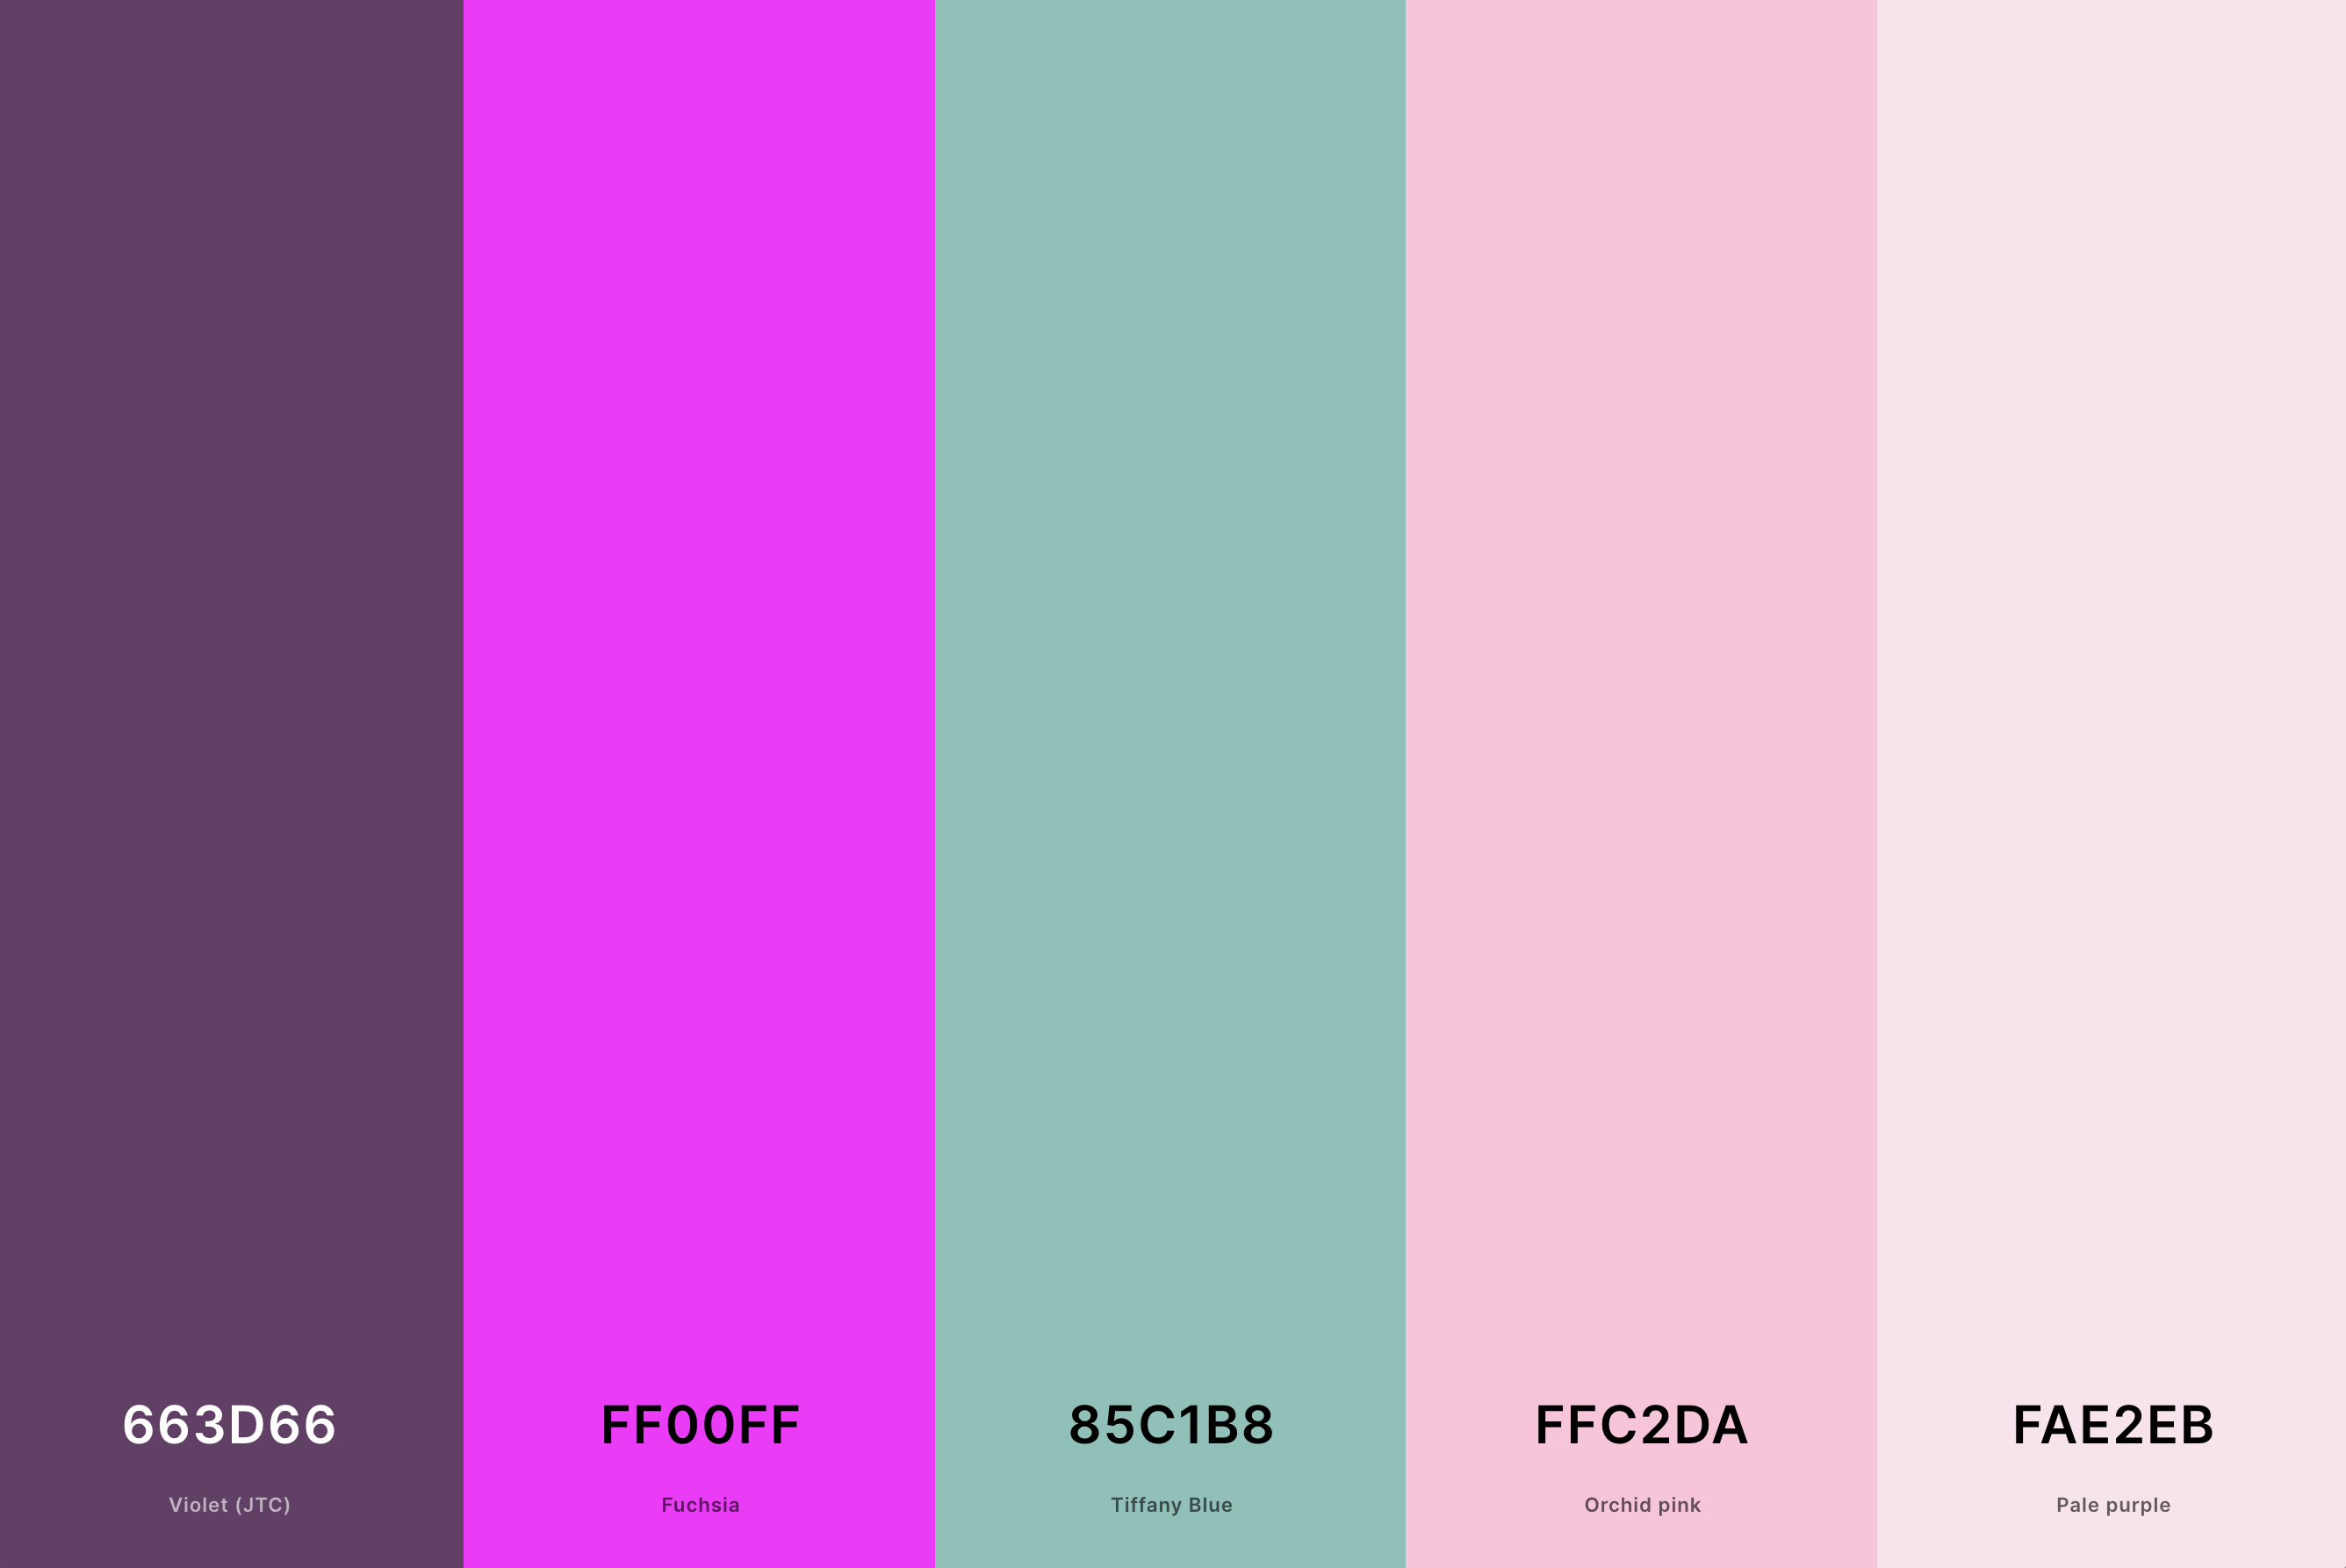 22. Magenta Wedding Color Palette Color Palette with Violet (Jtc) (Hex #663D66) + Magenta (Hex #FF00FF) + Tiffany Blue (Hex #85C1B8) + Orchid Pink (Hex #FFC2DA) + Pale Purple (Hex #FAE2EB) Color Palette with Hex Codes